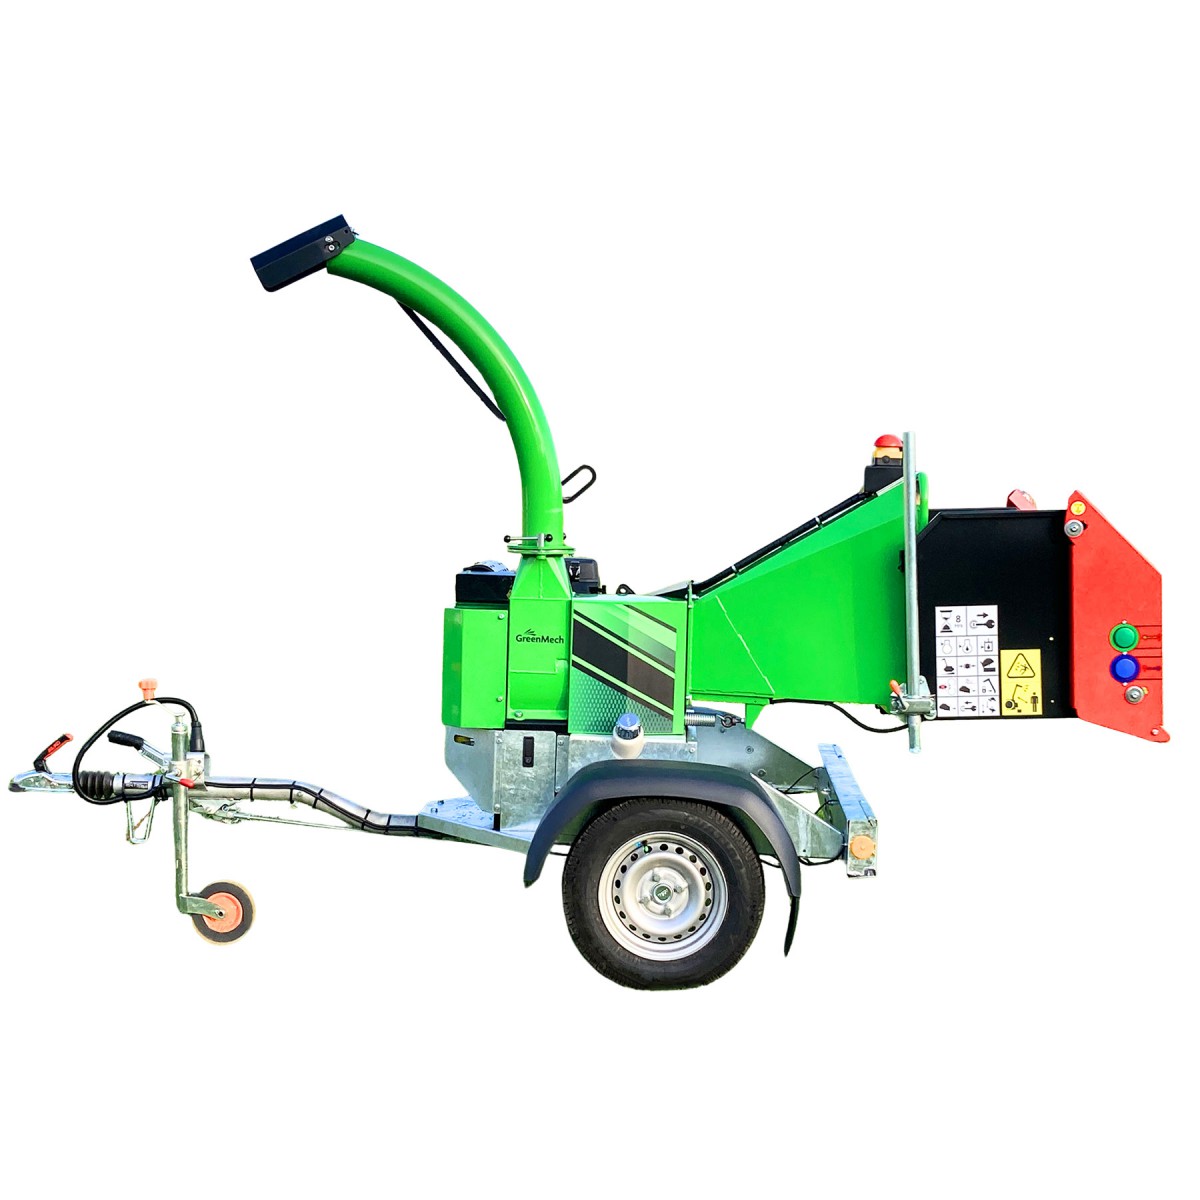 Benzin-Scheibenhäcksler ECO 135 GreenMech